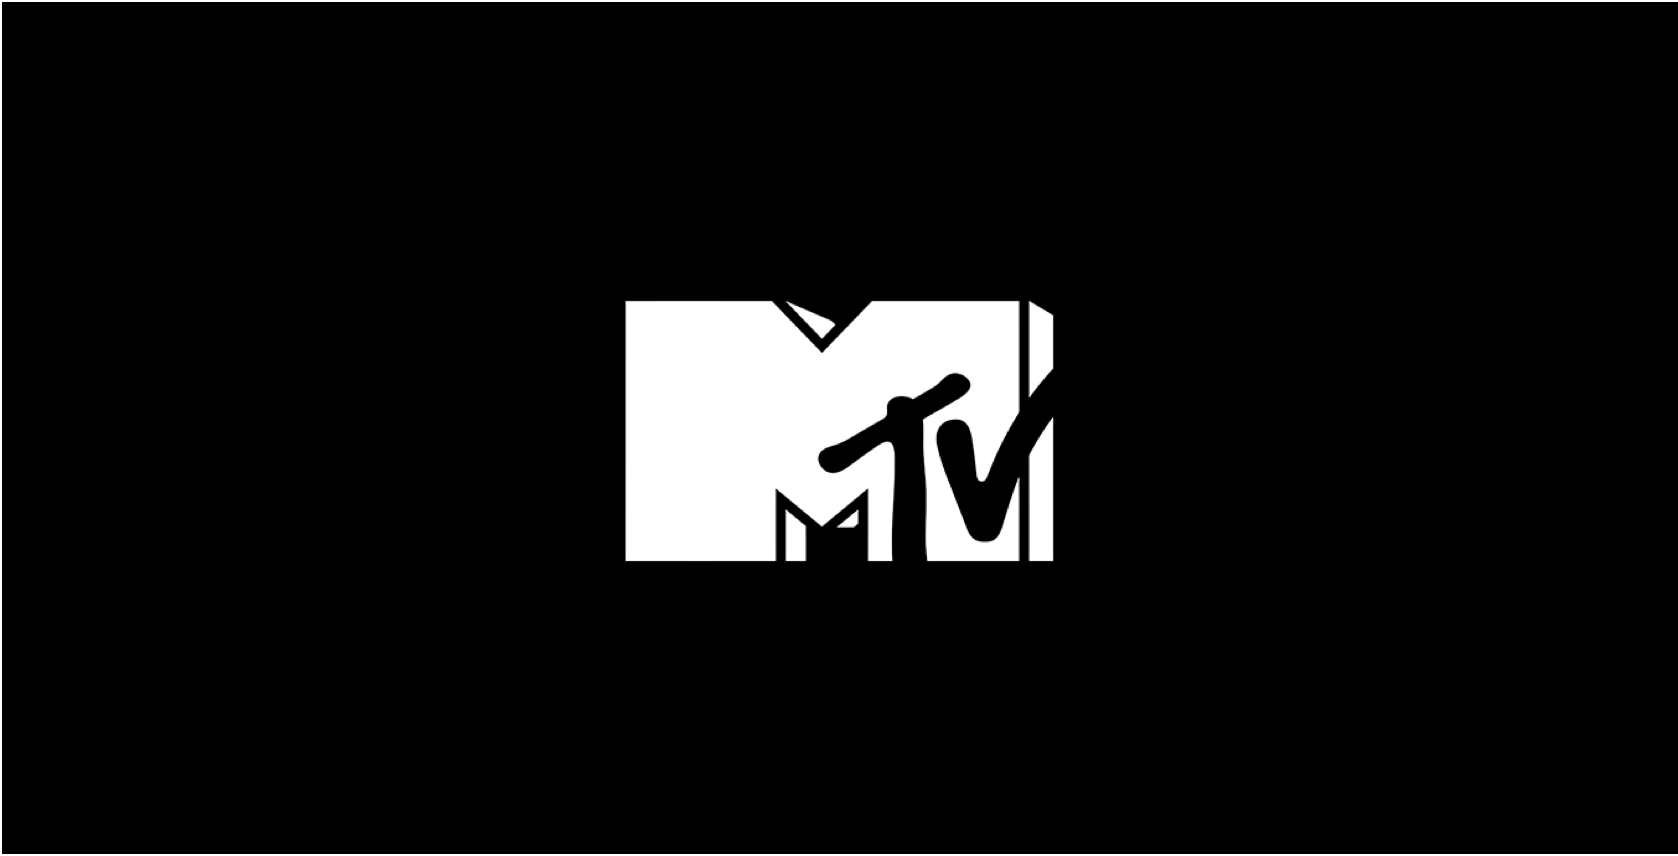 Machina x MTV Collaboration